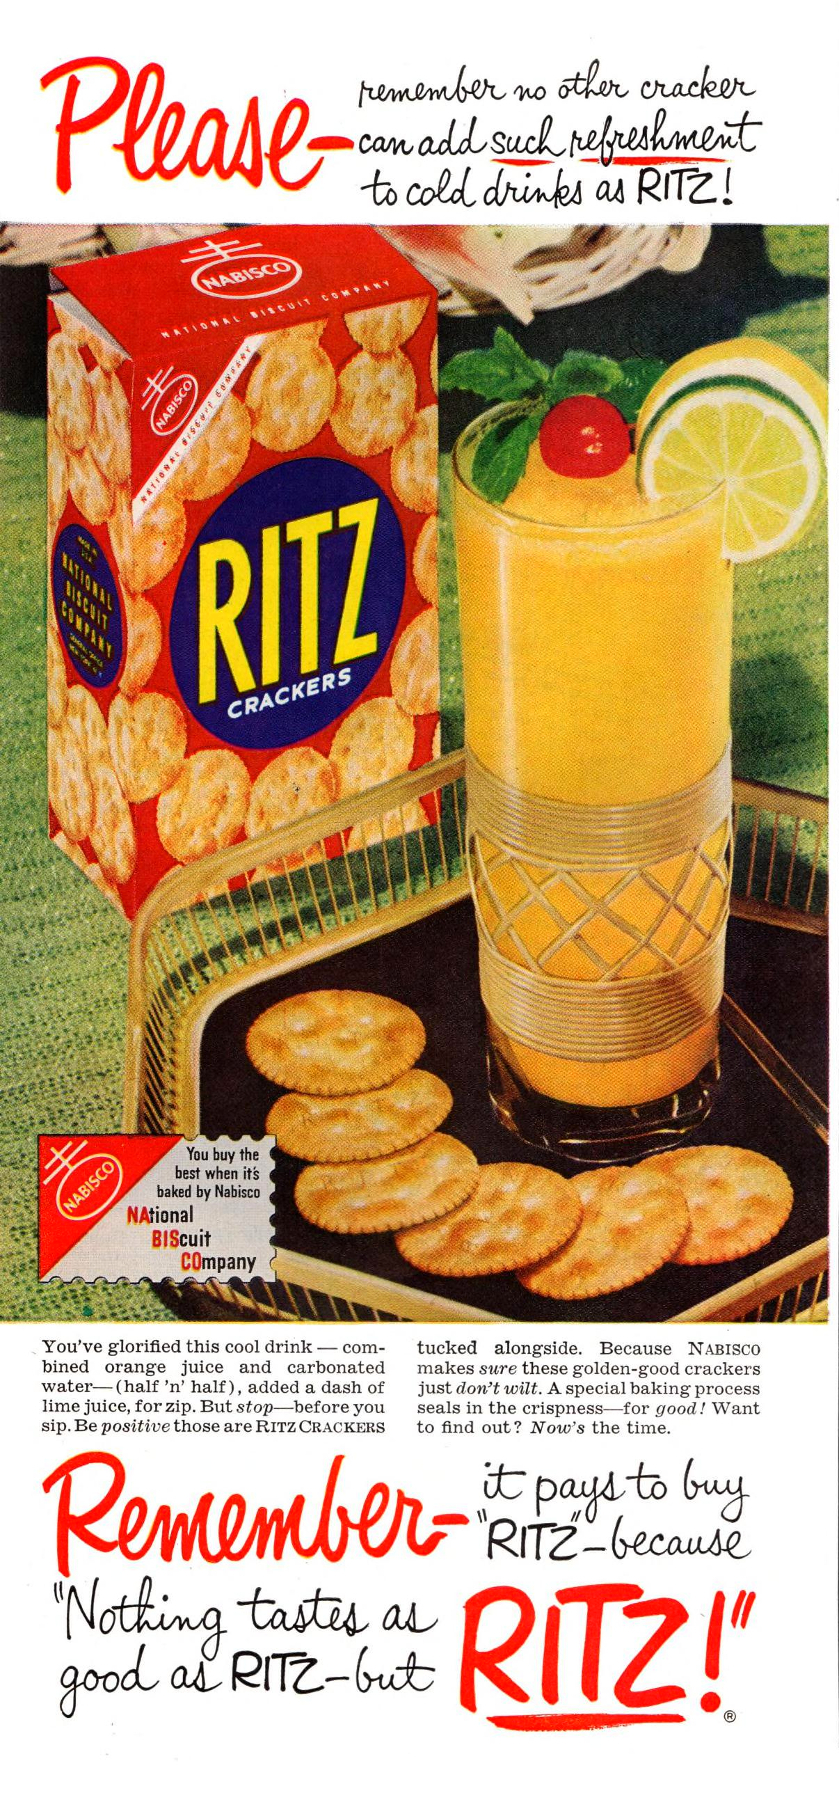 Remember it pays to buy "RITZ-Gecause Nothing , tastes as good al RITZ-but RiTZ!"